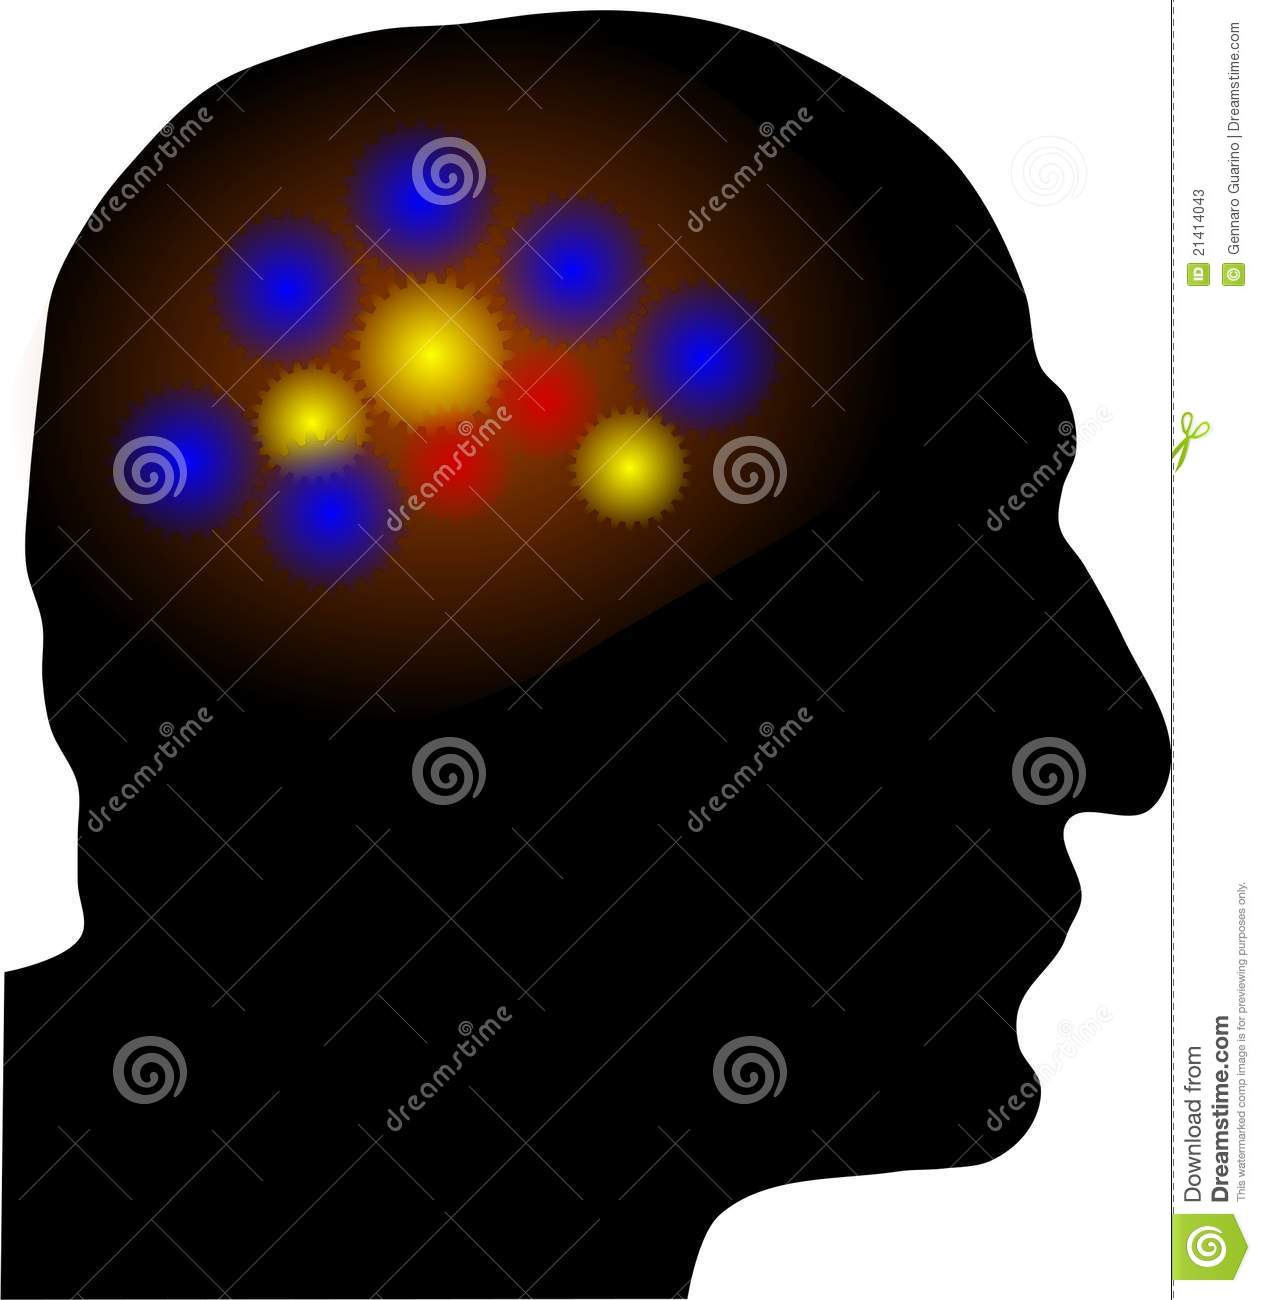 Human Brain Activity